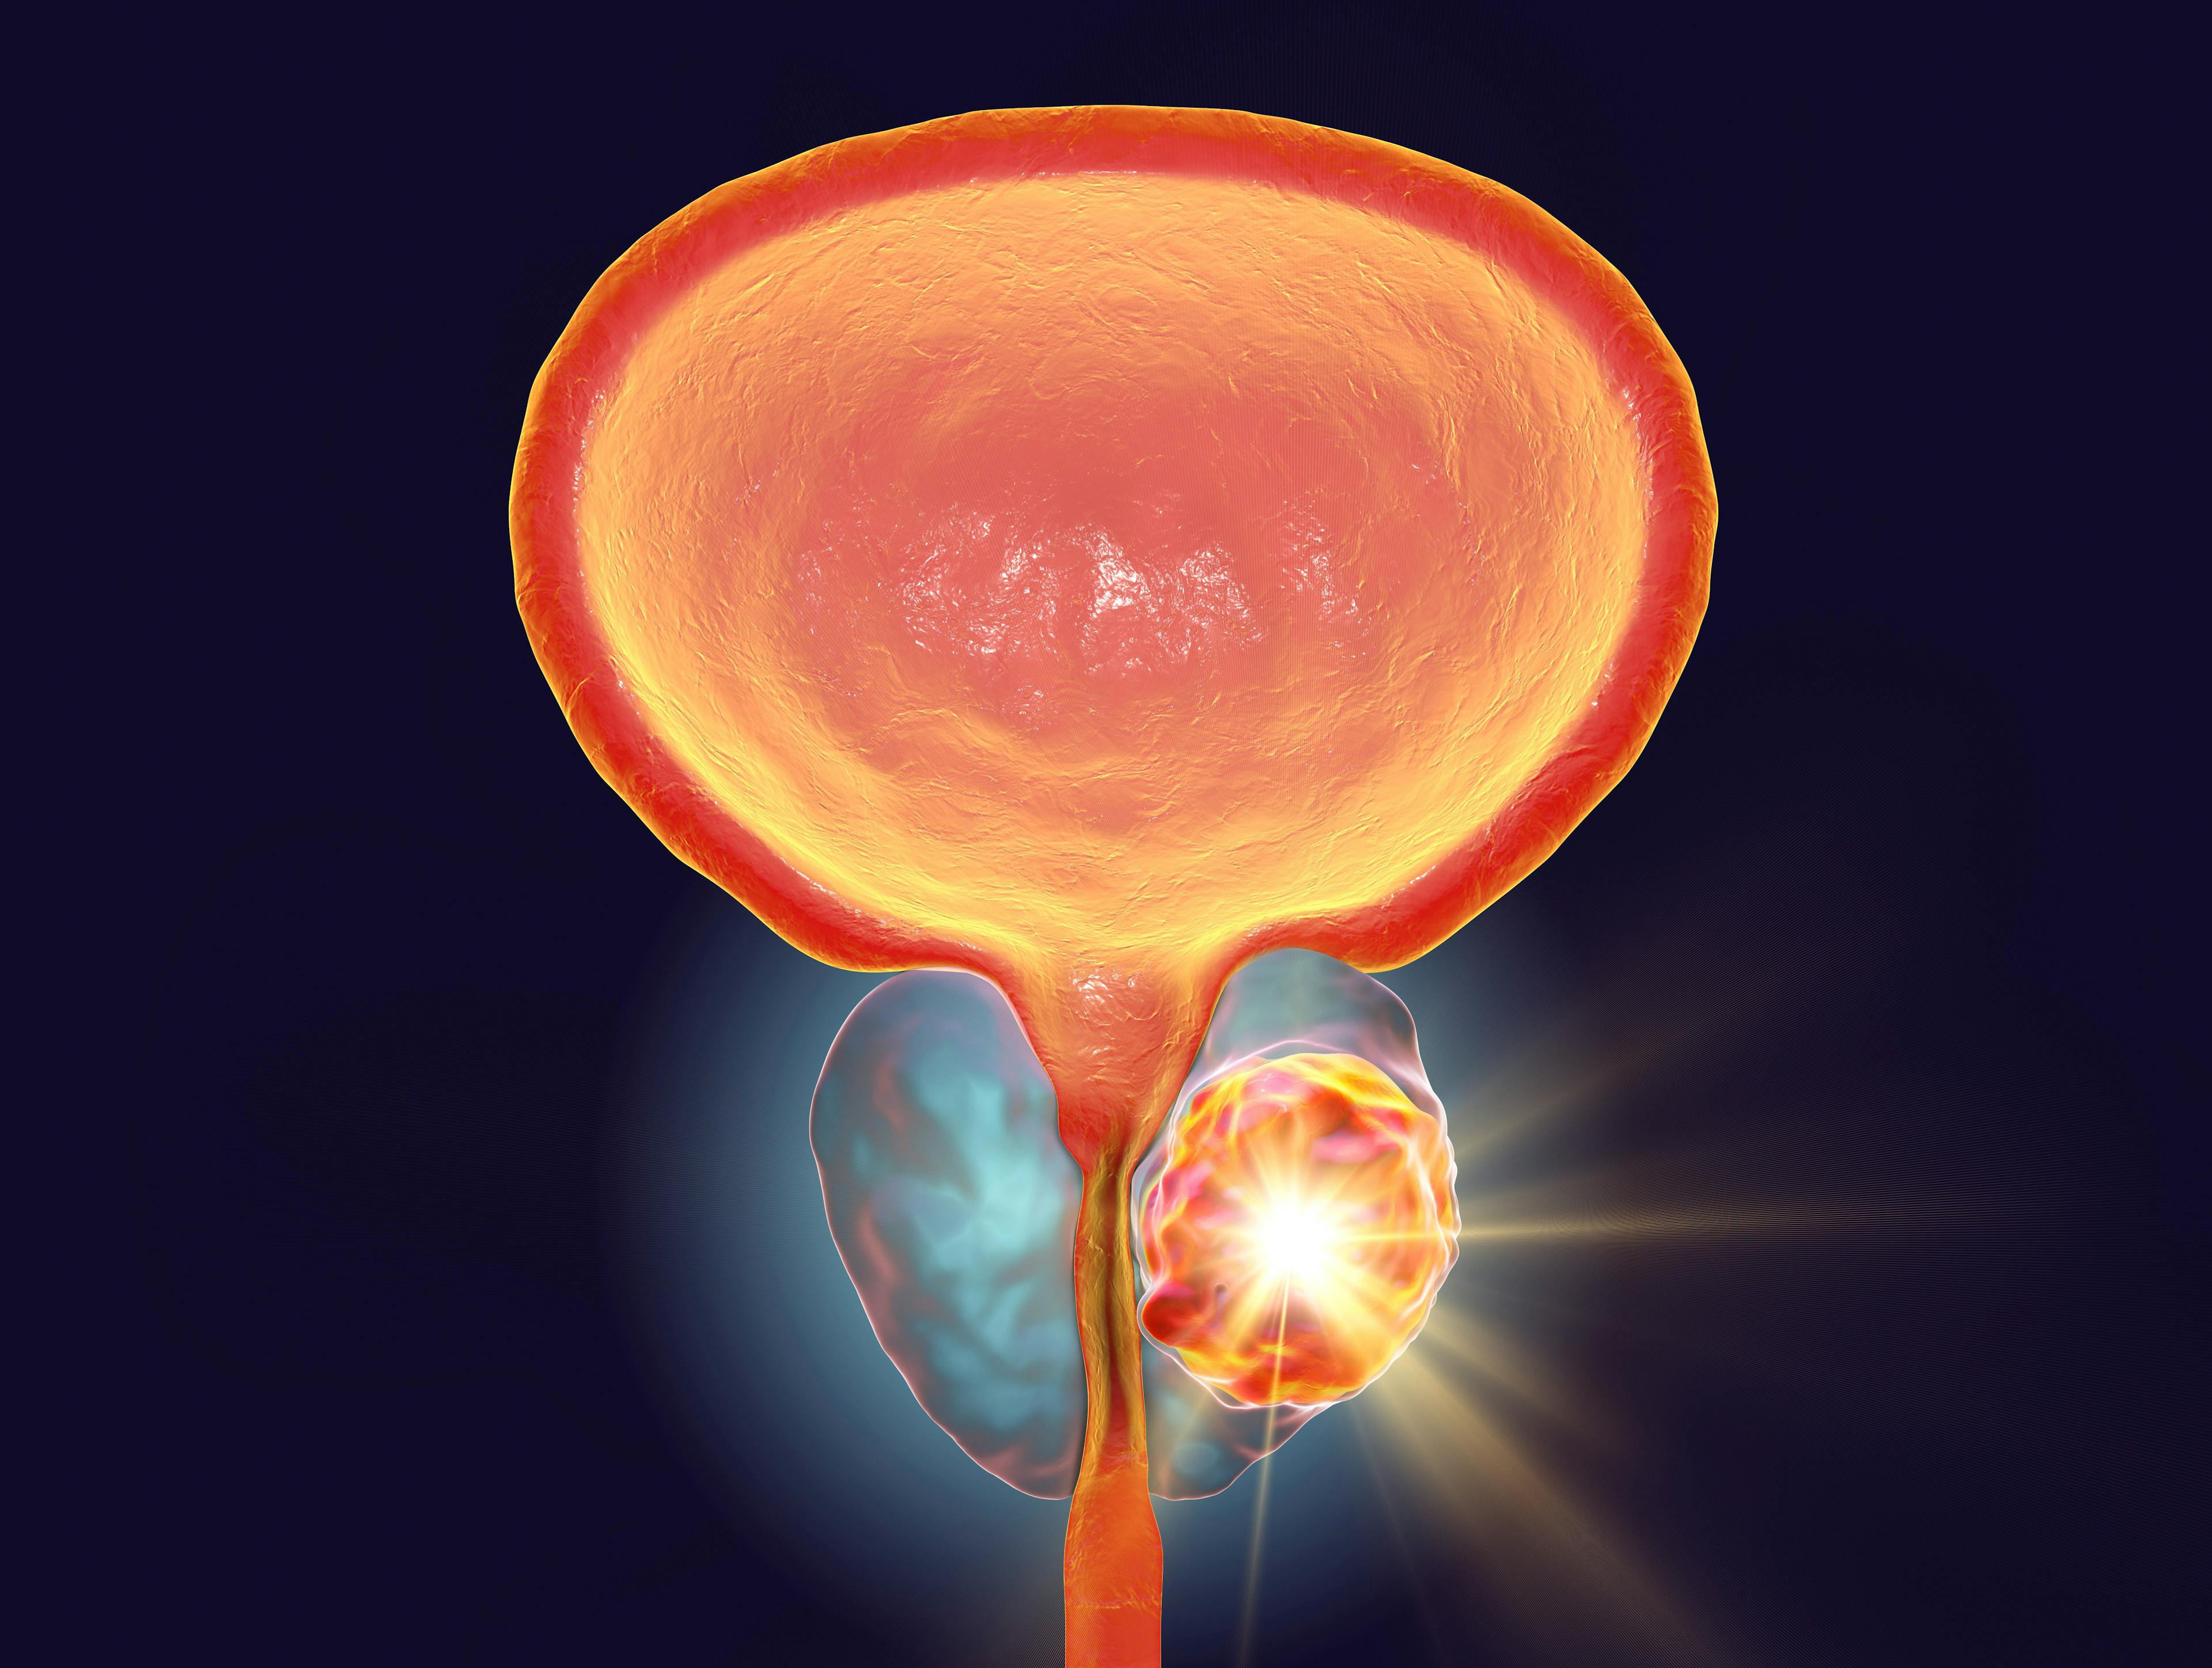 Image credit: Dr_Microbe | stock.adobe.com. Conceptual image for prostate cancer treatment, 3D illustration showing destruction of a tumor inside prostate gland